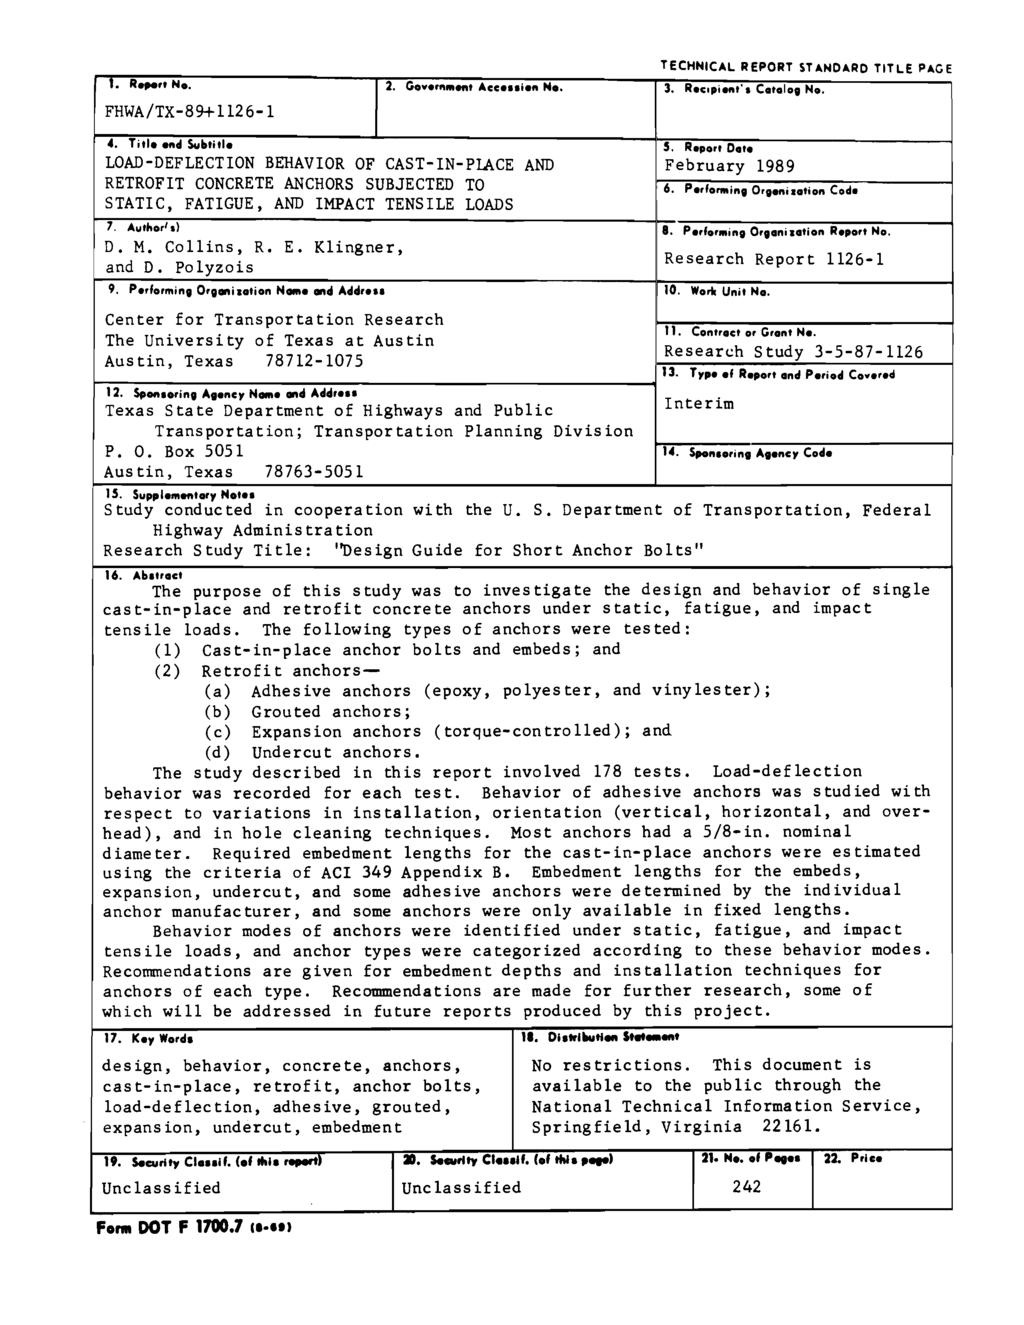 1. R.,.n No. FHWA/TX-89+1126-1 TECHNCAL REPORT STANDARD TTLE PAGE 3. Recopiel'lt' Cotoloe No. 4.